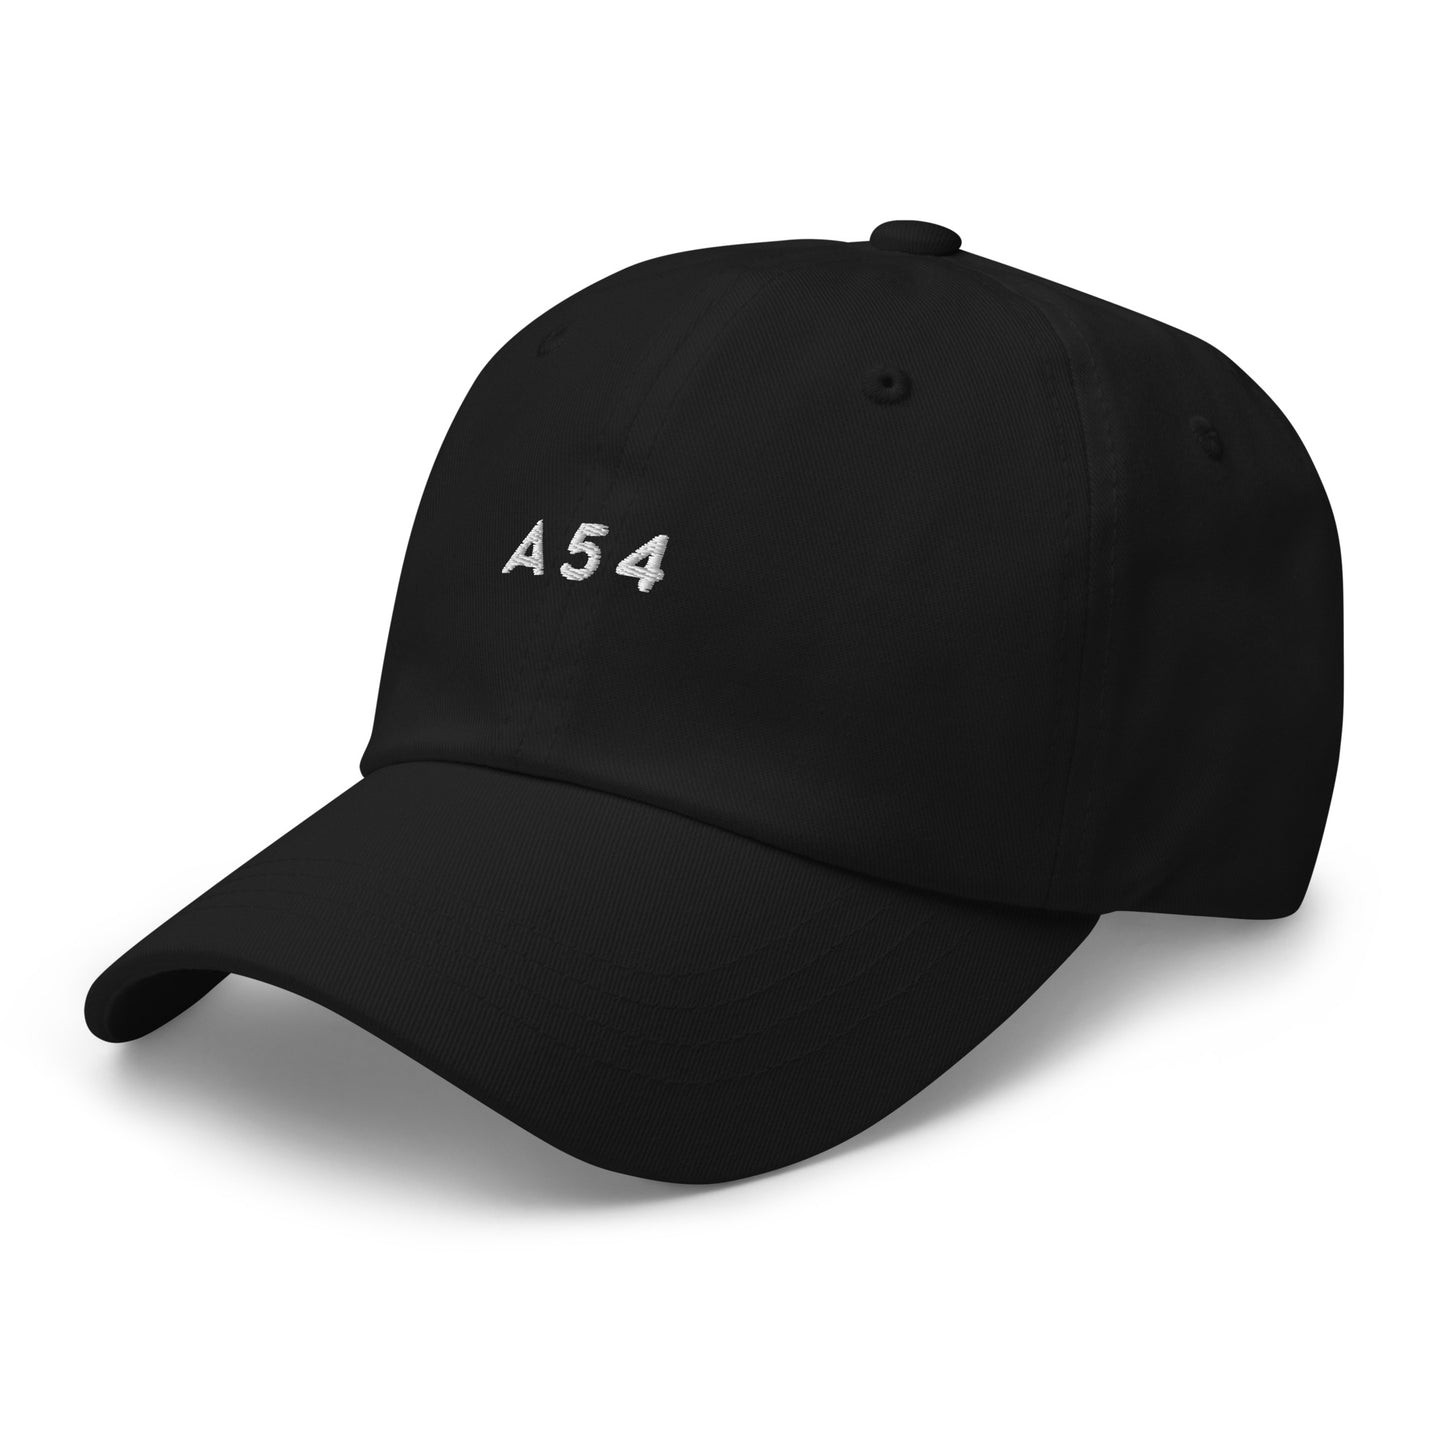 A54 Official Baseball Hat